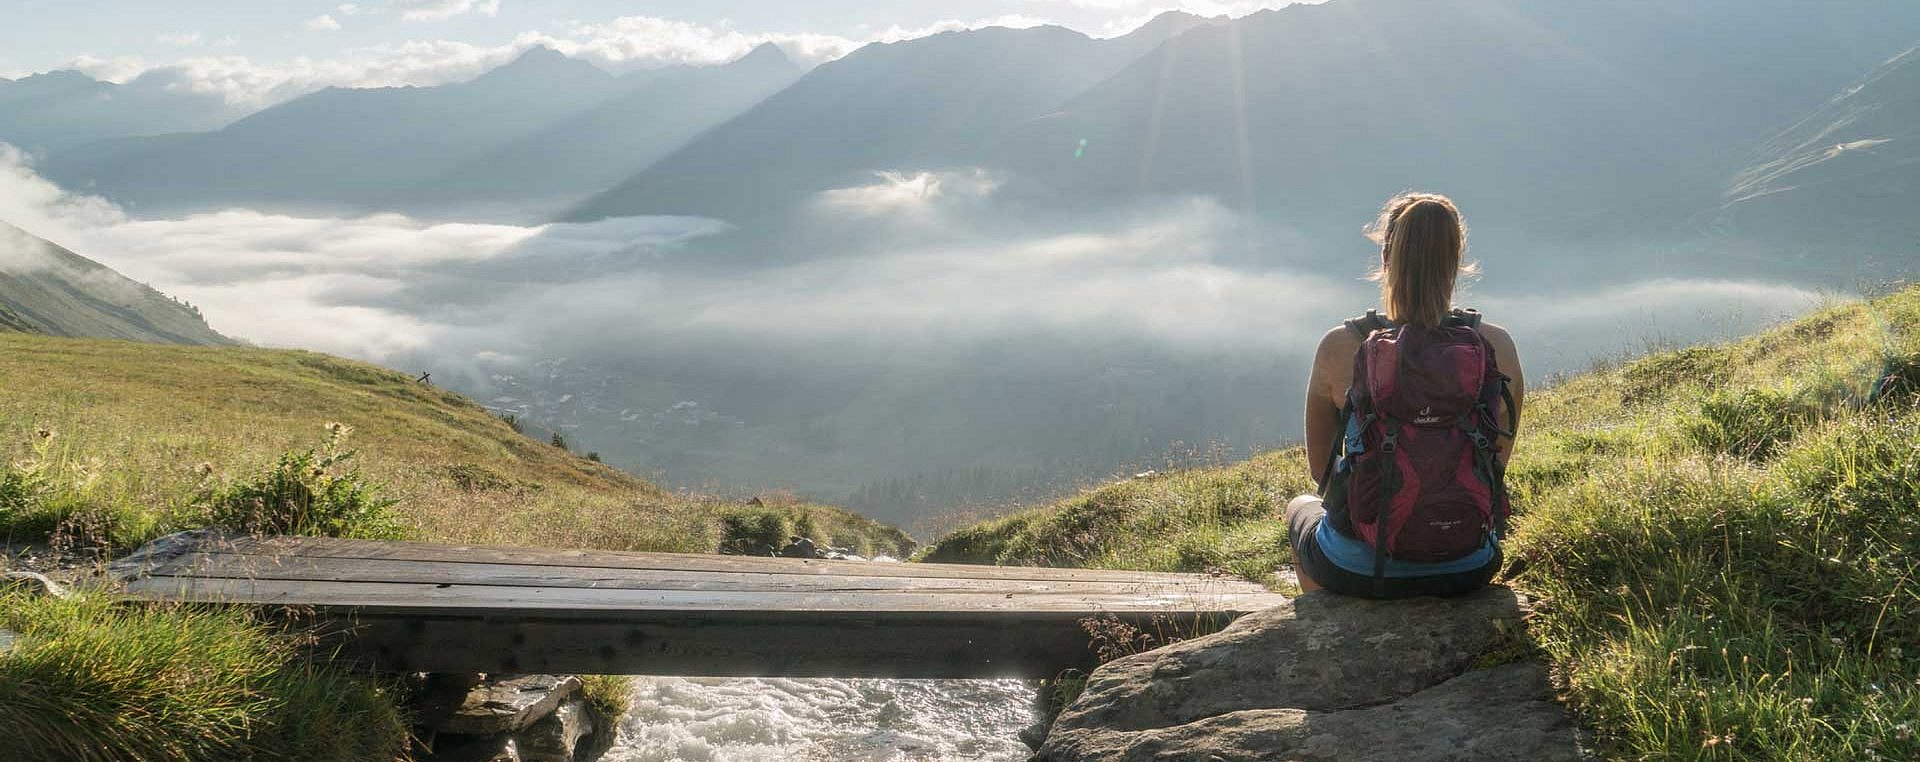 Wanderer sitzt am Steg vor Bergpanorama